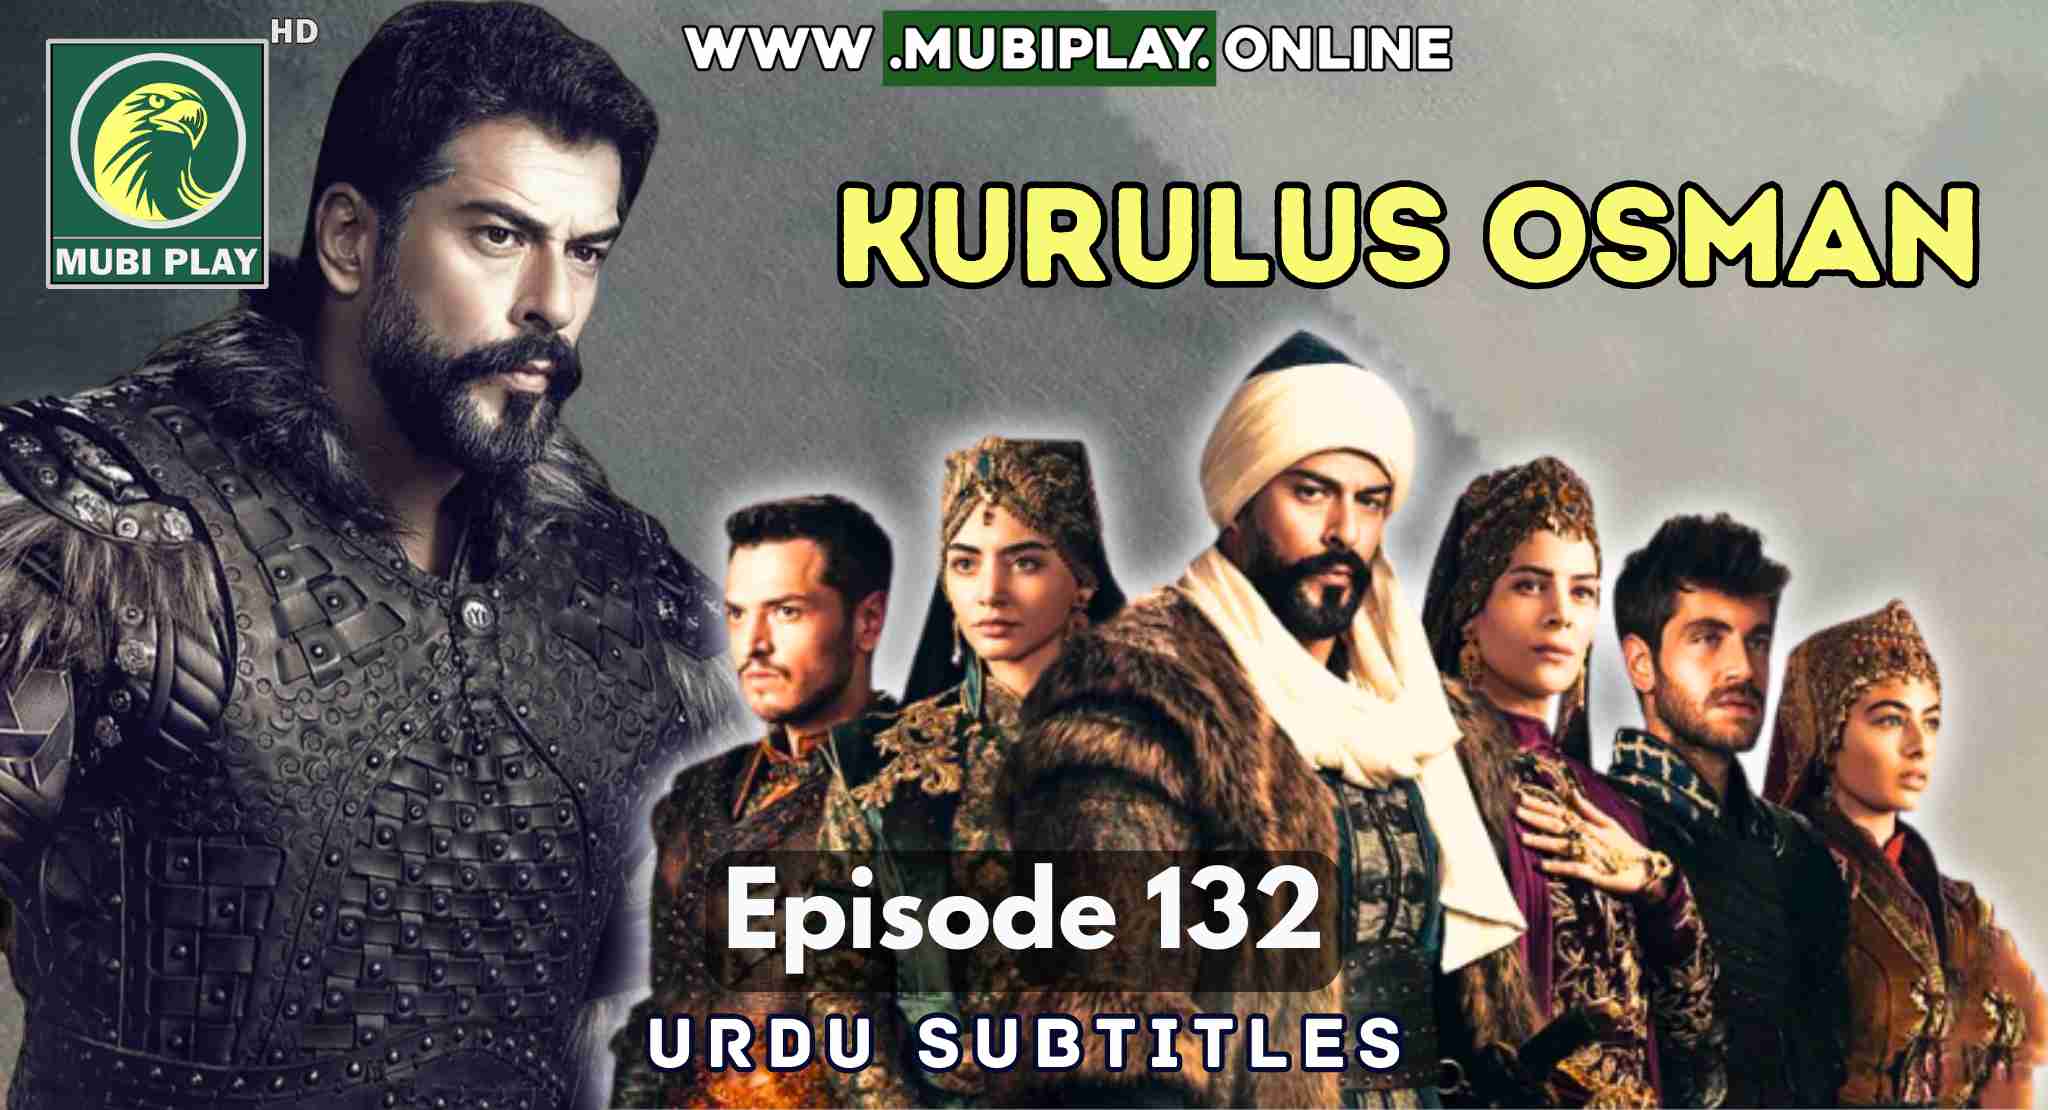 Kurulus Osman Episode 132 with Urdu Subtitles by Mubi Play